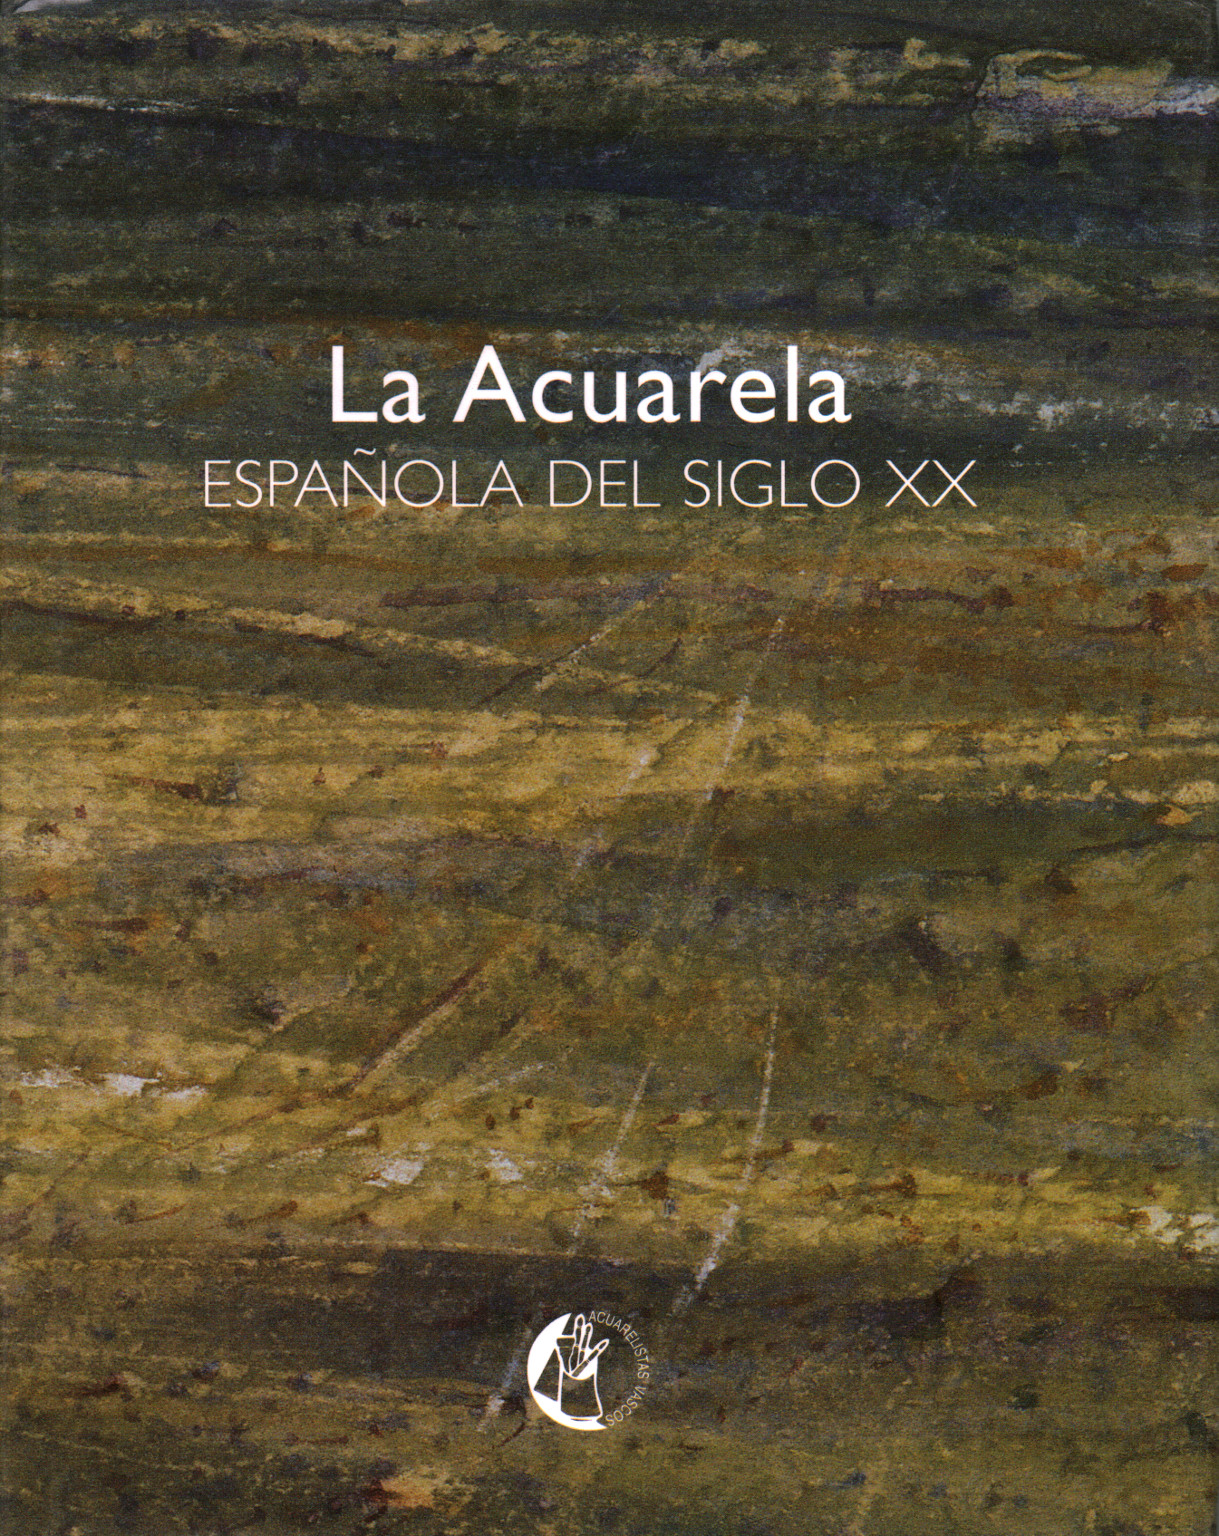 La Acuarela espanola del siglo XX, s.a.